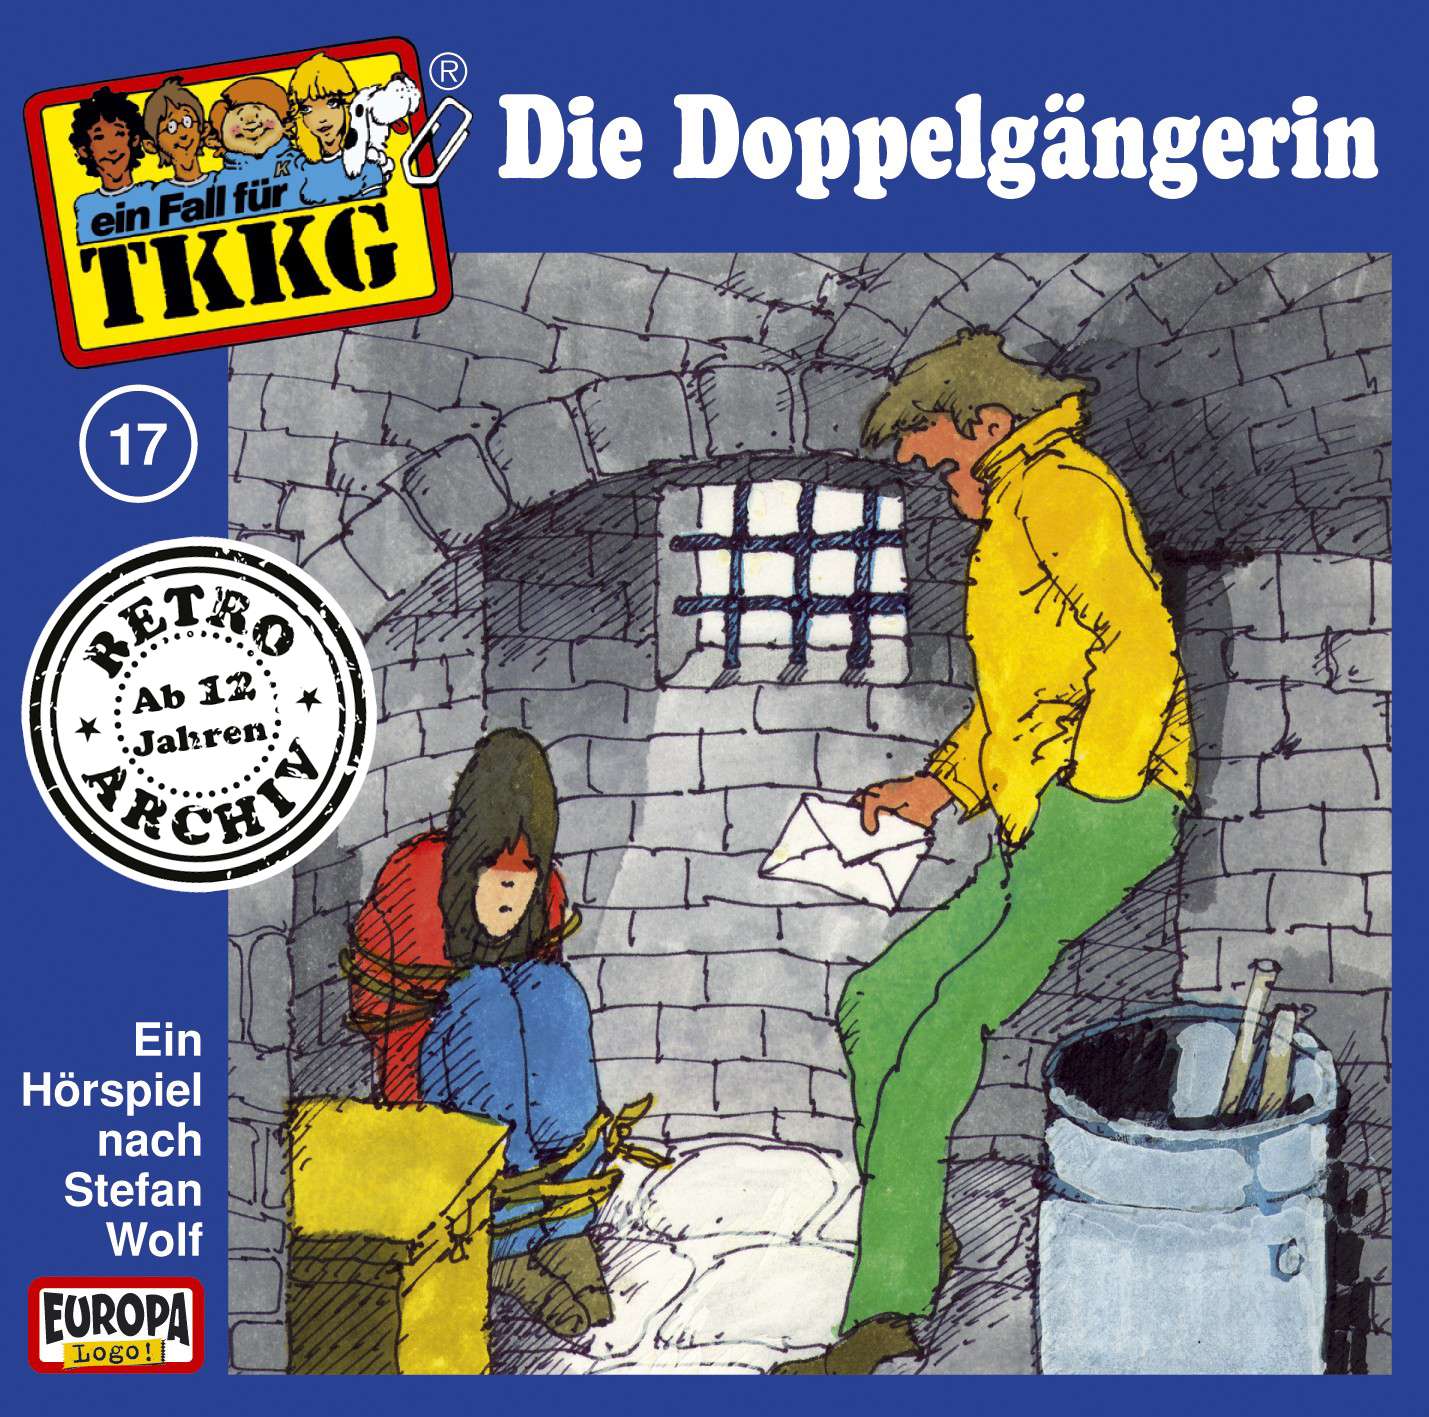 TKKG Retro-Archiv: Die Doppelgängerin